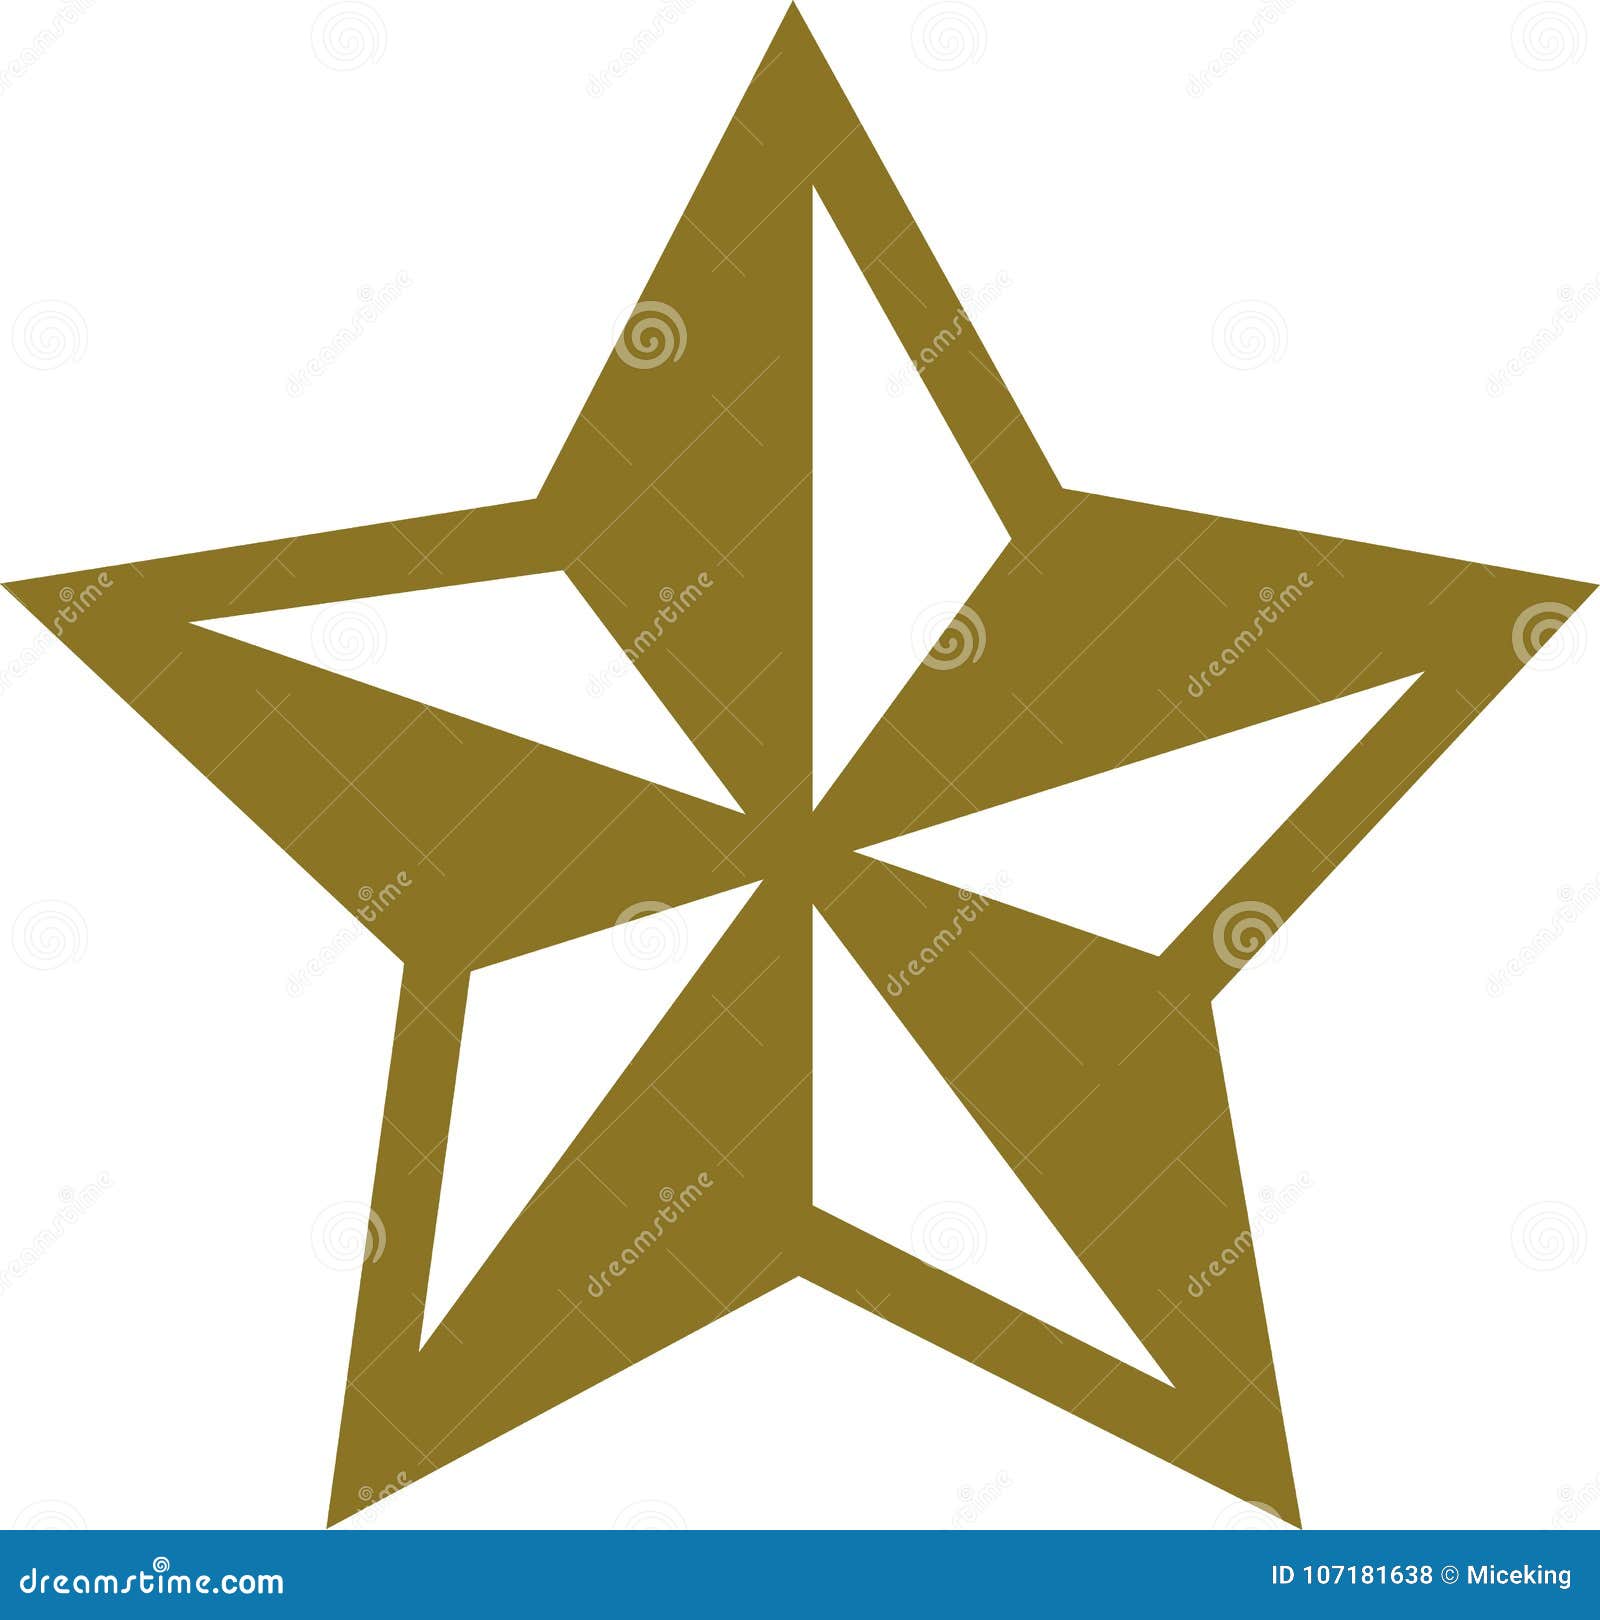 nautic golden star